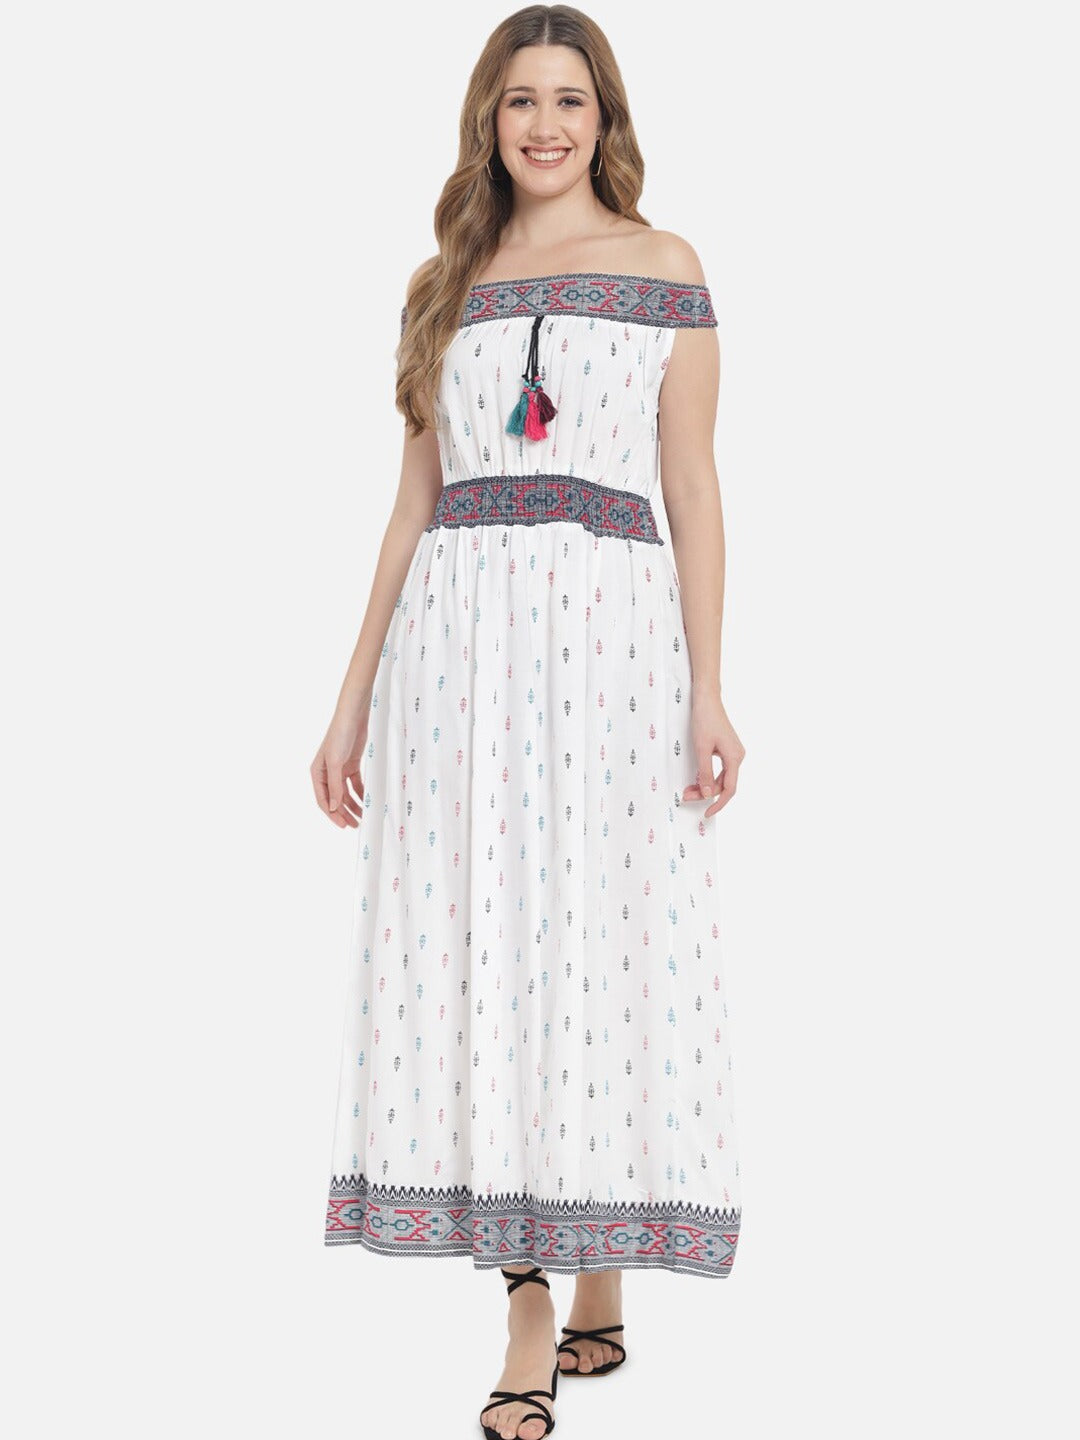 Women's White and Multi colour printed flared maxi dress - Meeranshi